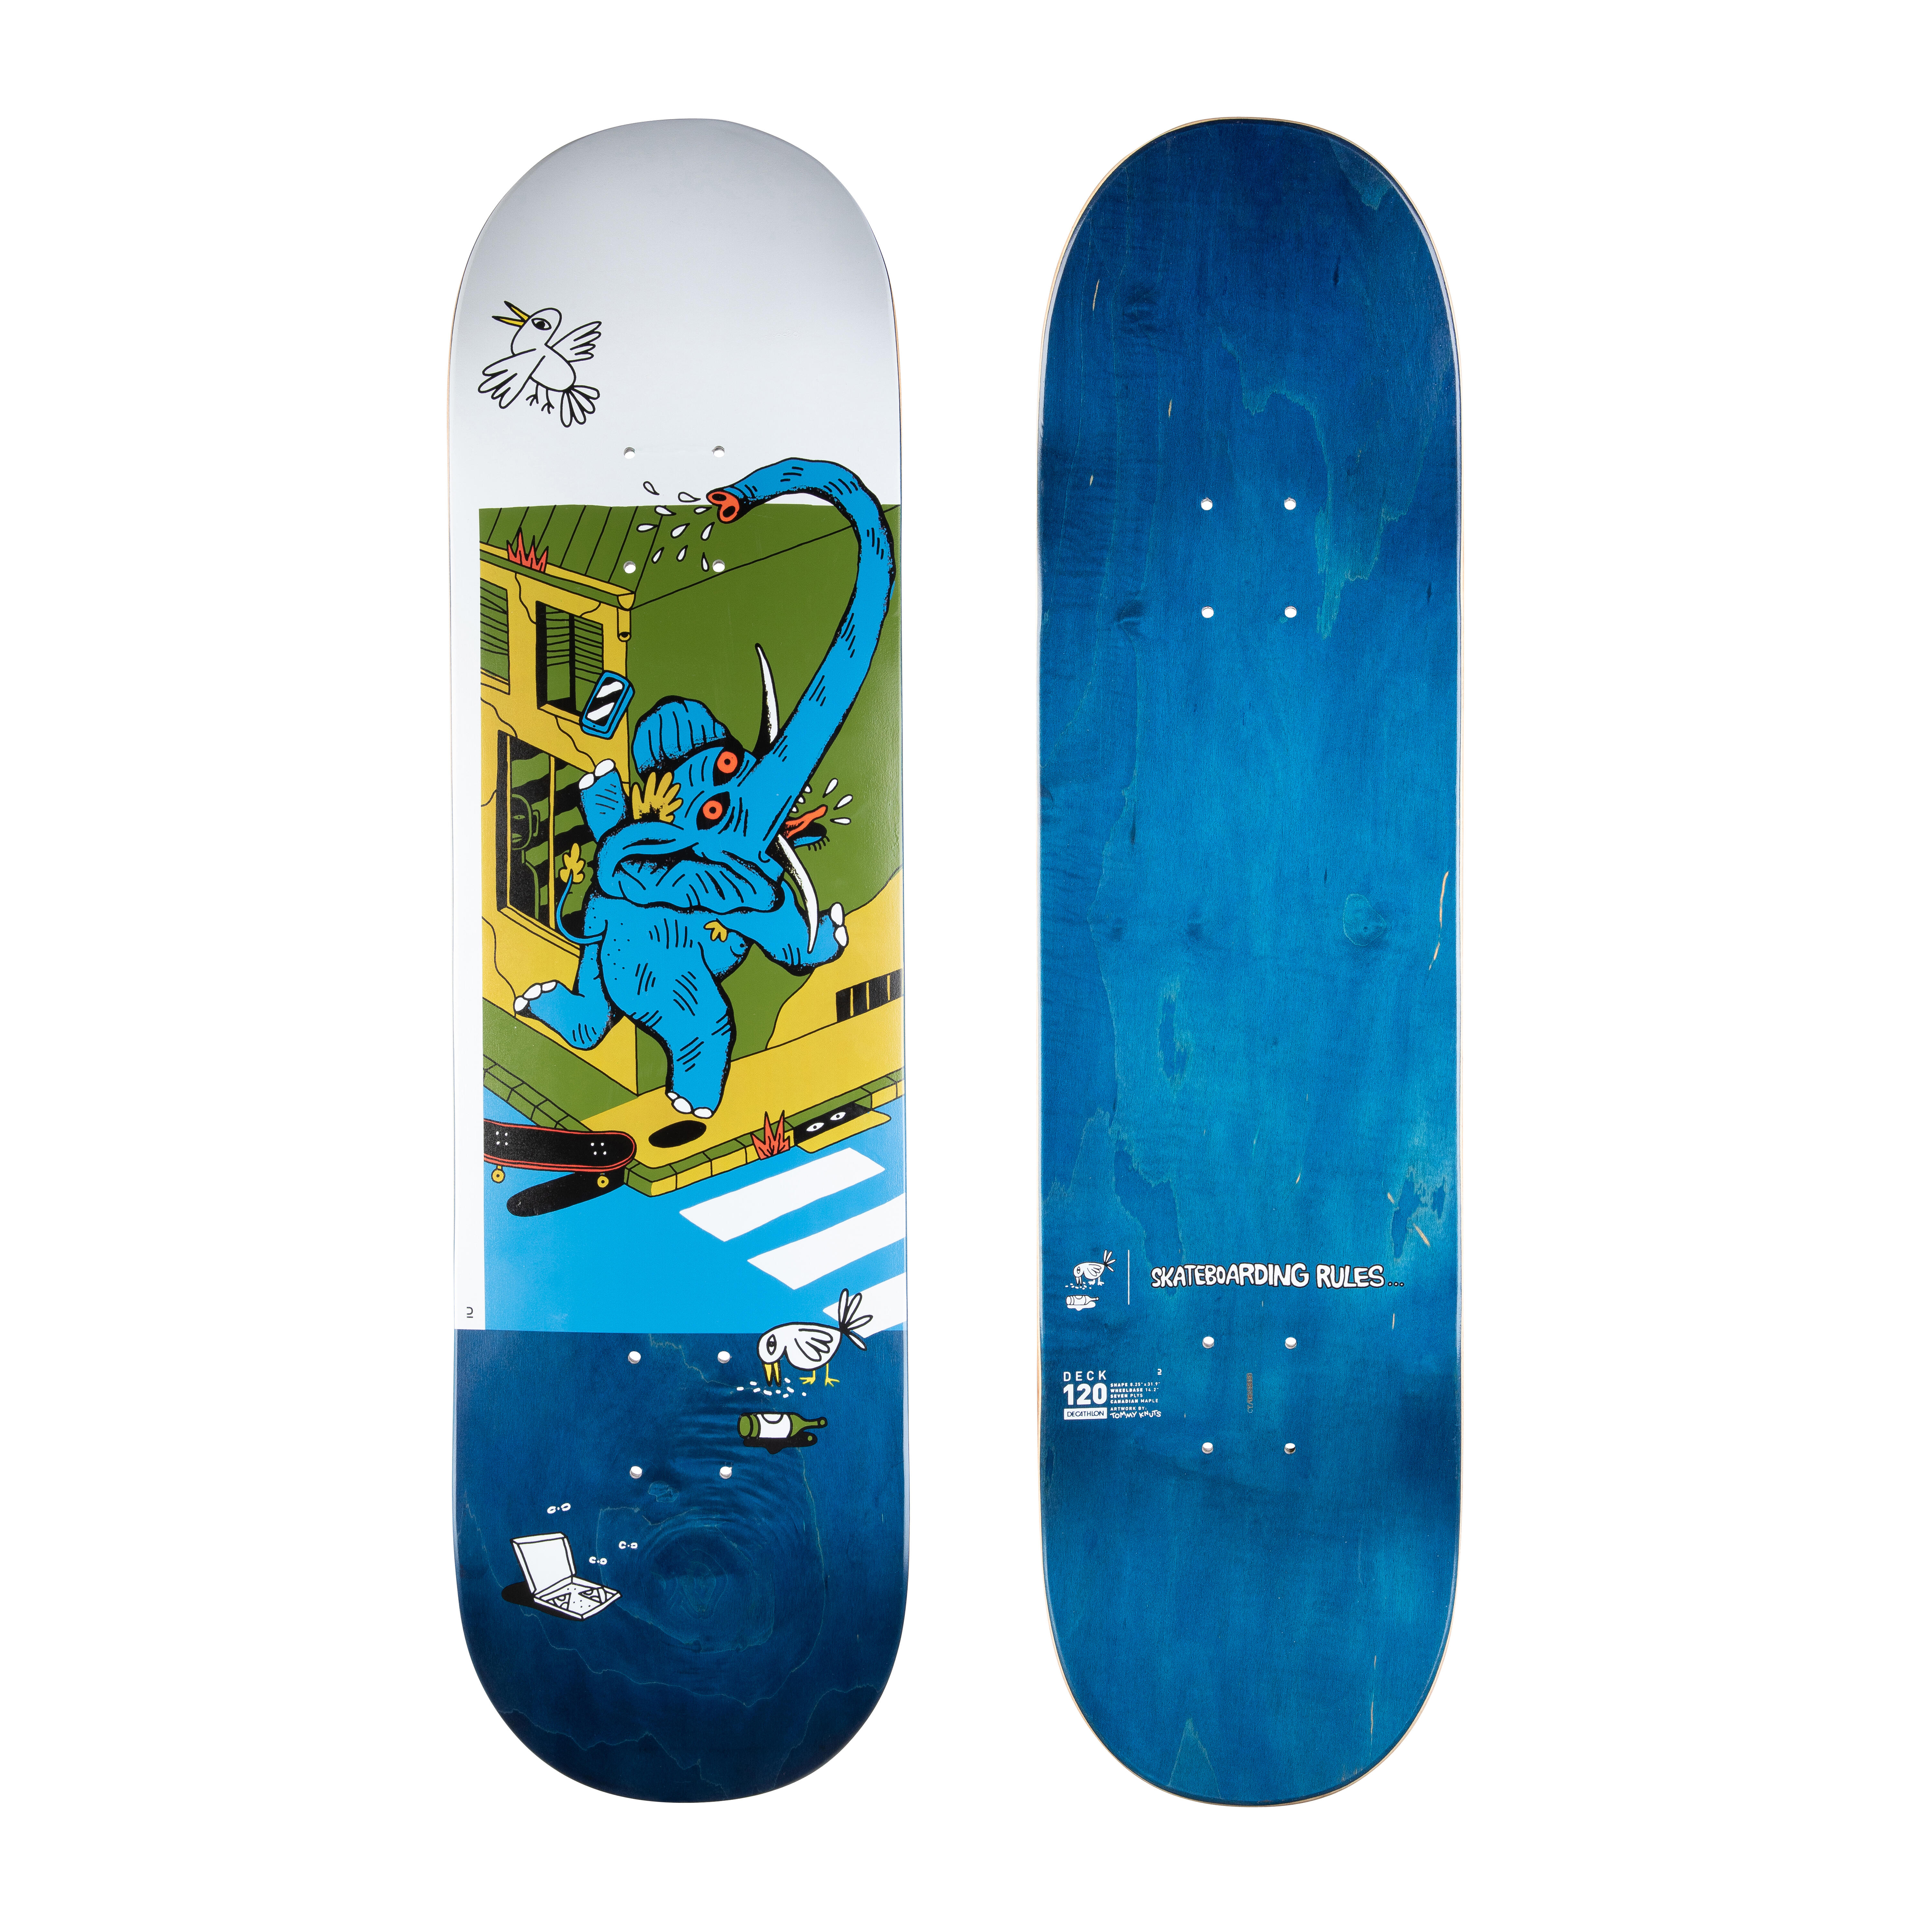 Placă skateboard DK120 KNUTS – SKATEBOARDING RULES 8.25″ decathlon.ro  Placi si piese de schimb skateboard